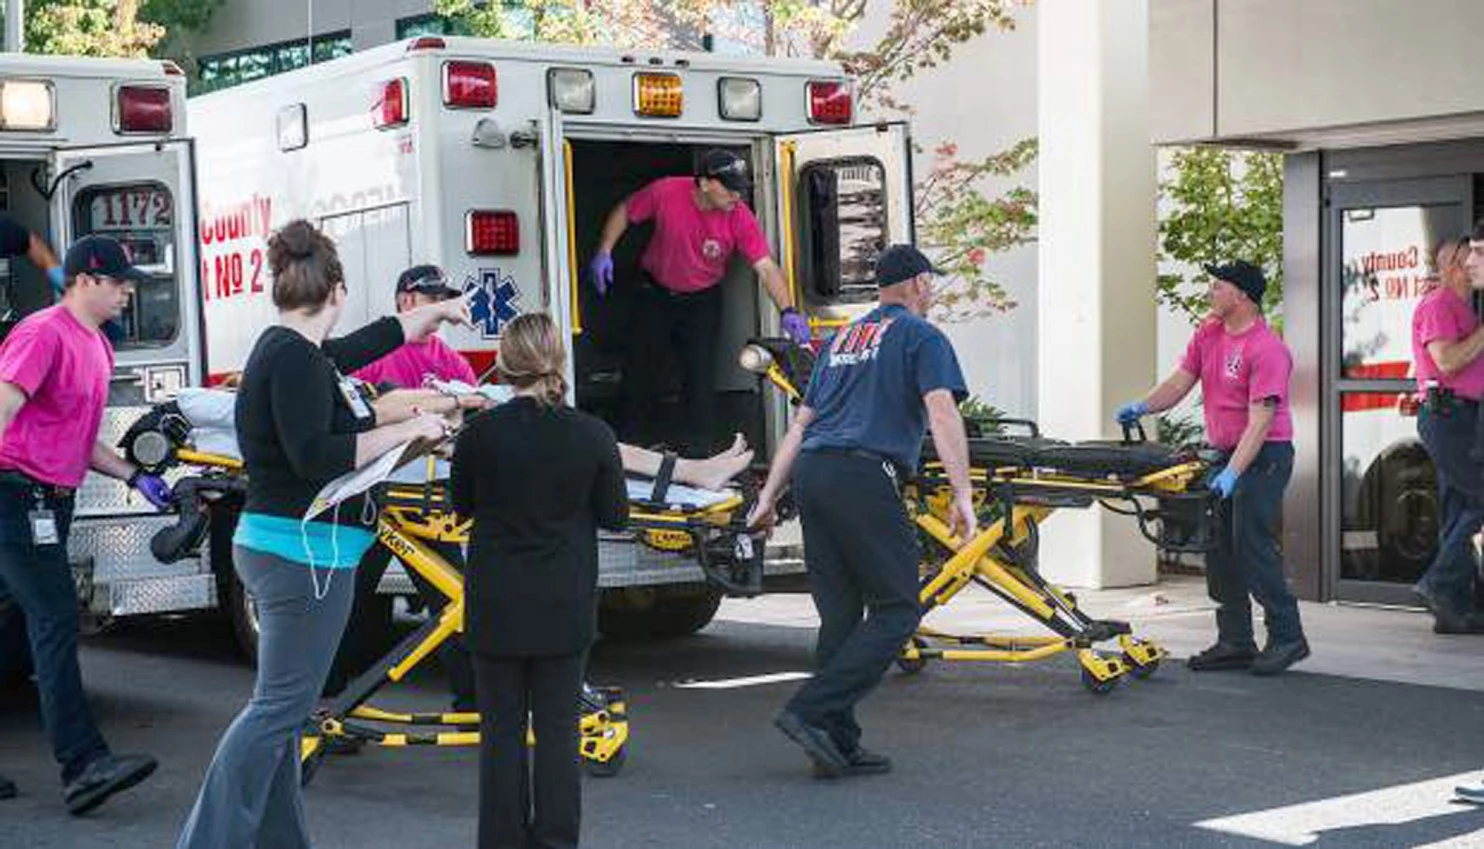 BREAKING 10 Killed, 20 Injured At Oregon Community College By Gunman